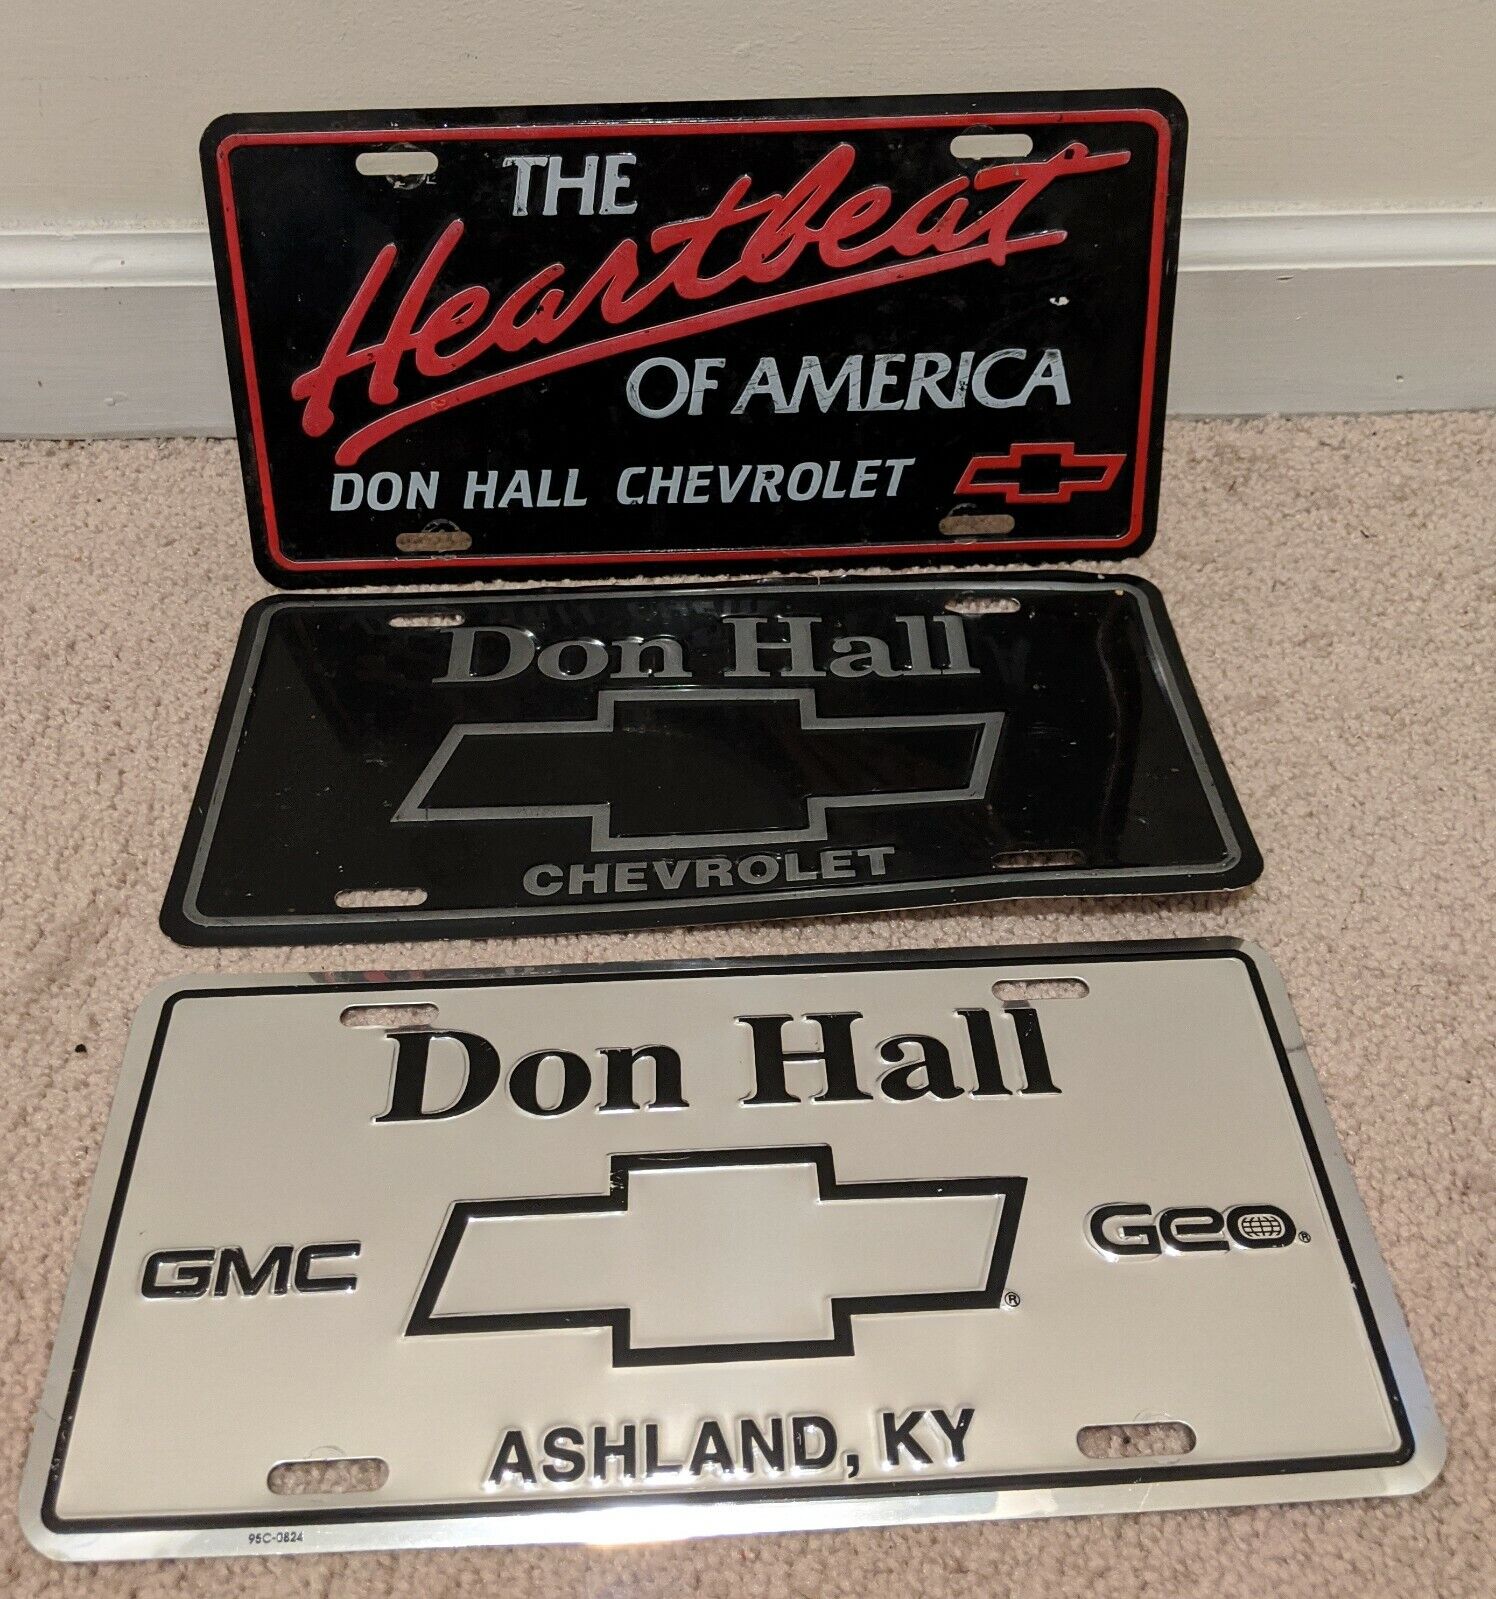 Set of 3 Don Hall Ashland Ky License Plates CHEVROLET CHEVY GEO GMC advertising